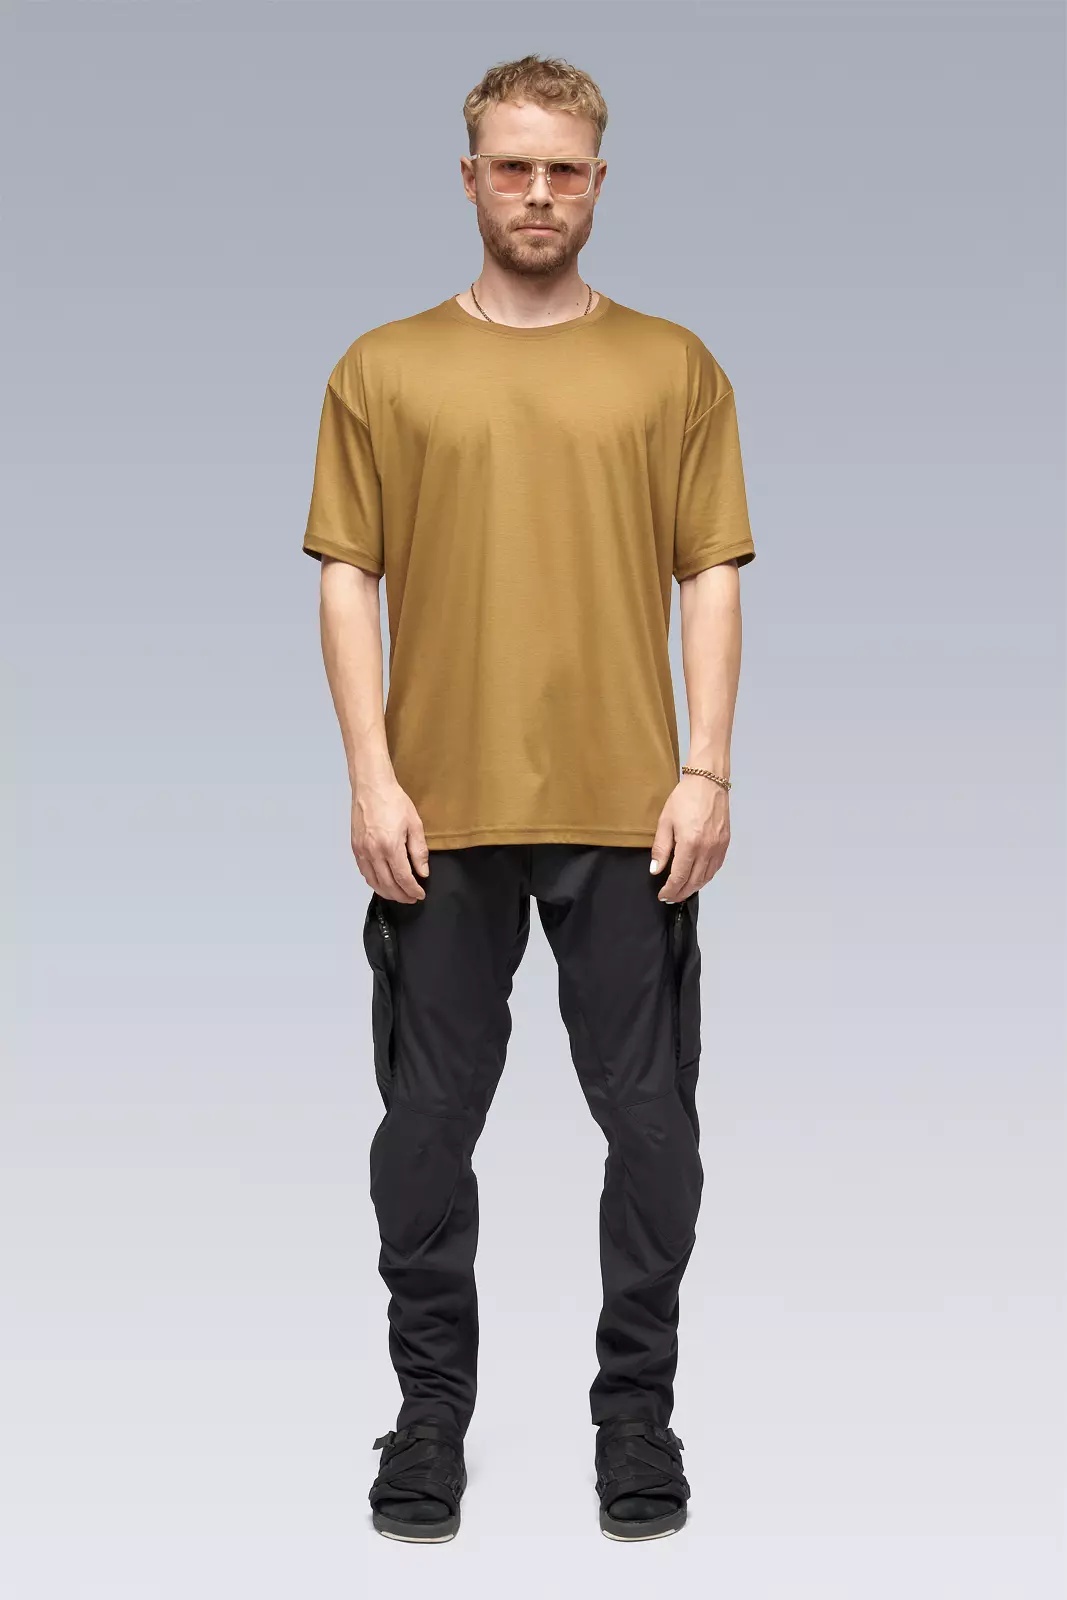 S24-PR-A 100% Cotton Mercerized Short Sleeve T-shirt Coyote - 1